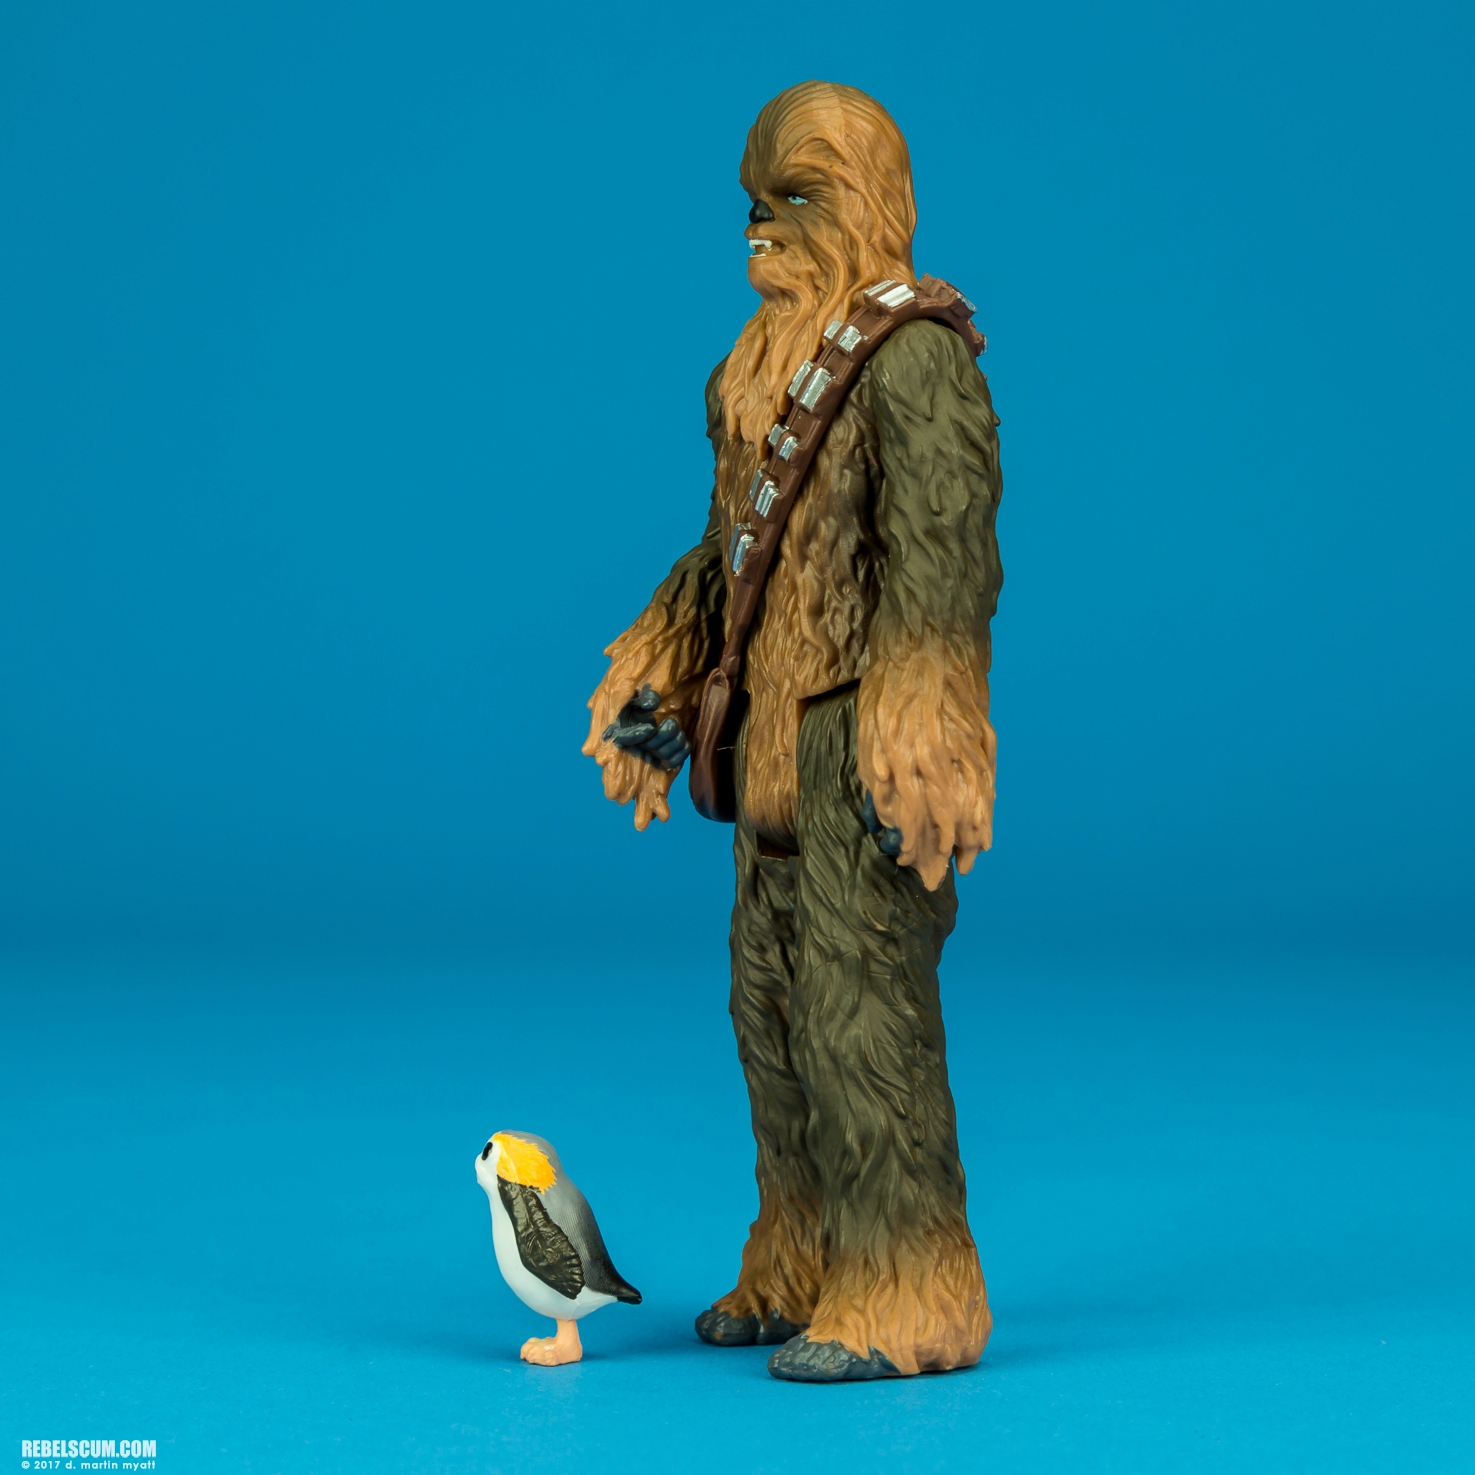 The-Last-Jedi-Star-Wars-Universe-Chewbacca-Porg-003.jpg